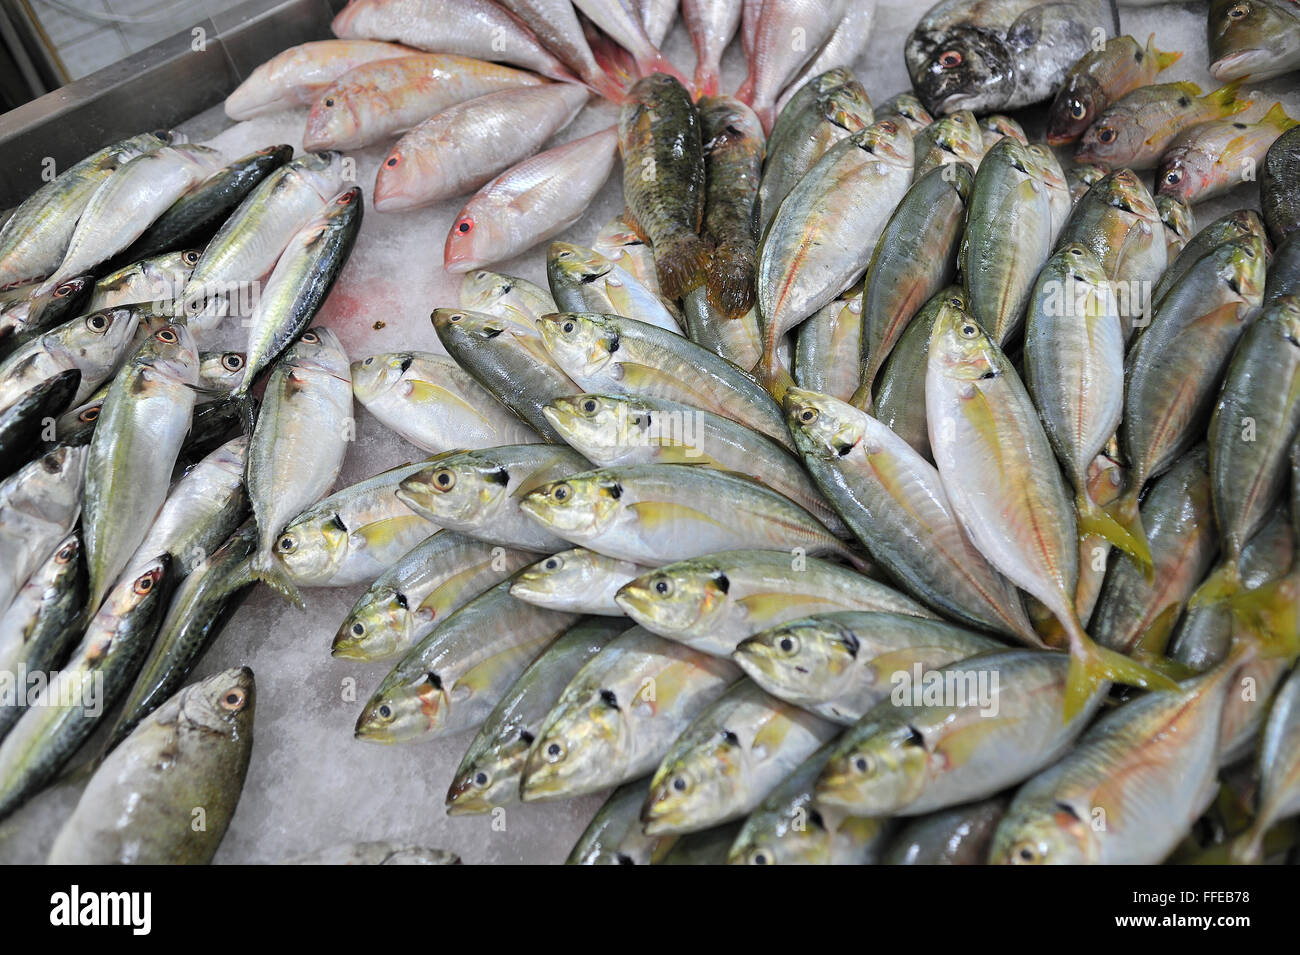 Fresh fish for sale in Metro Gaisano supermarket Ayala Center Cebu Philippines Stock Photo